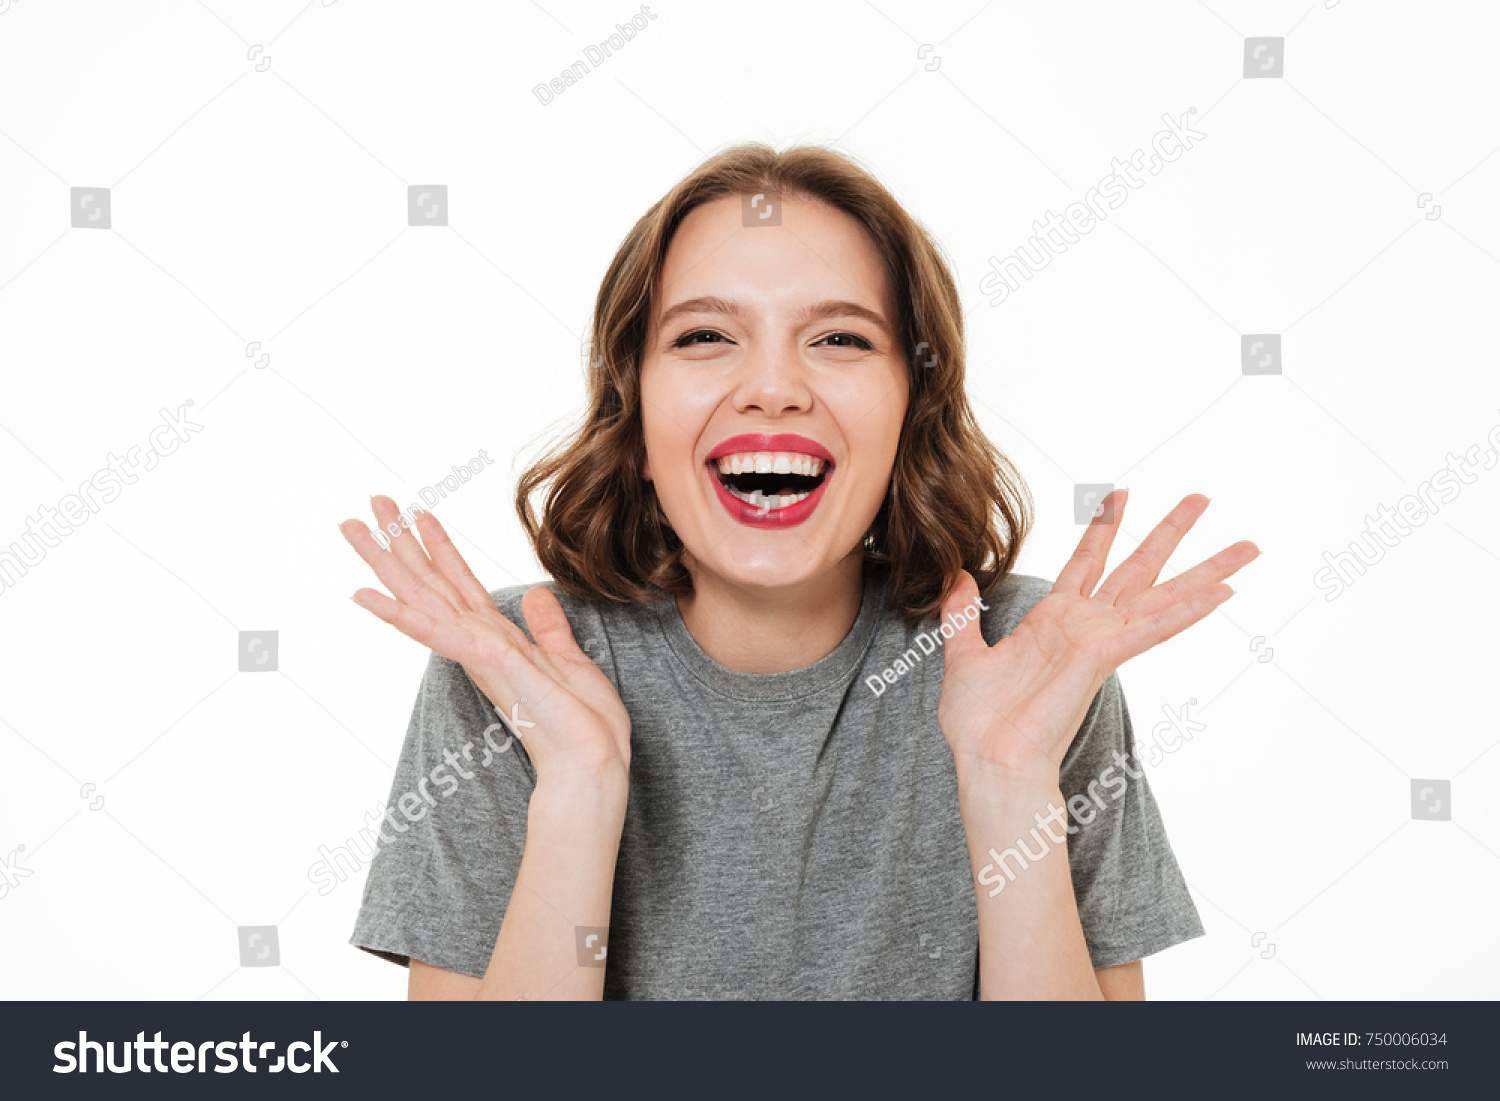 644 Afbeeldingen Voor Close Up Portrait Of Woman Laughing With Hand 